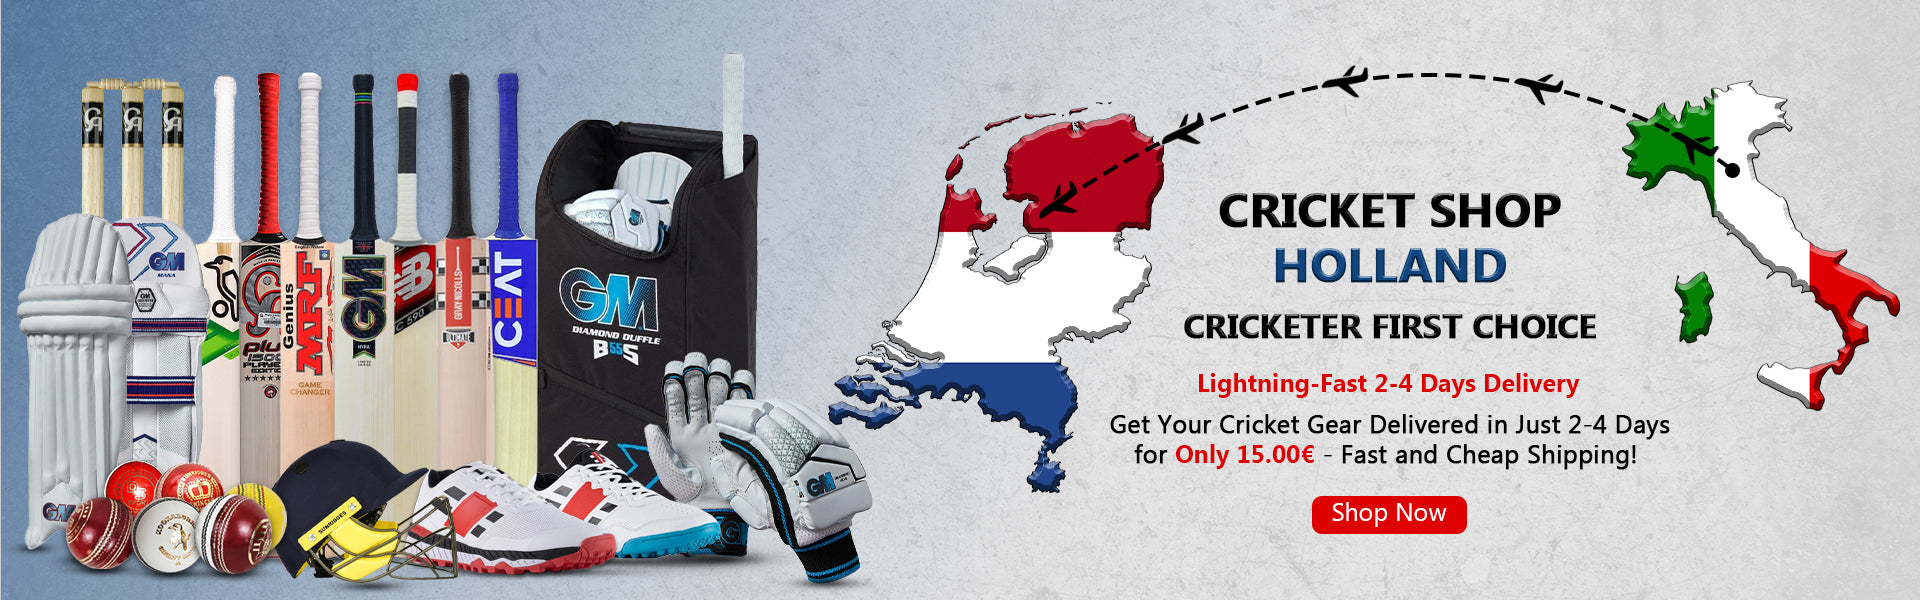 Cricket Shop Holland | Cricketer first Choice